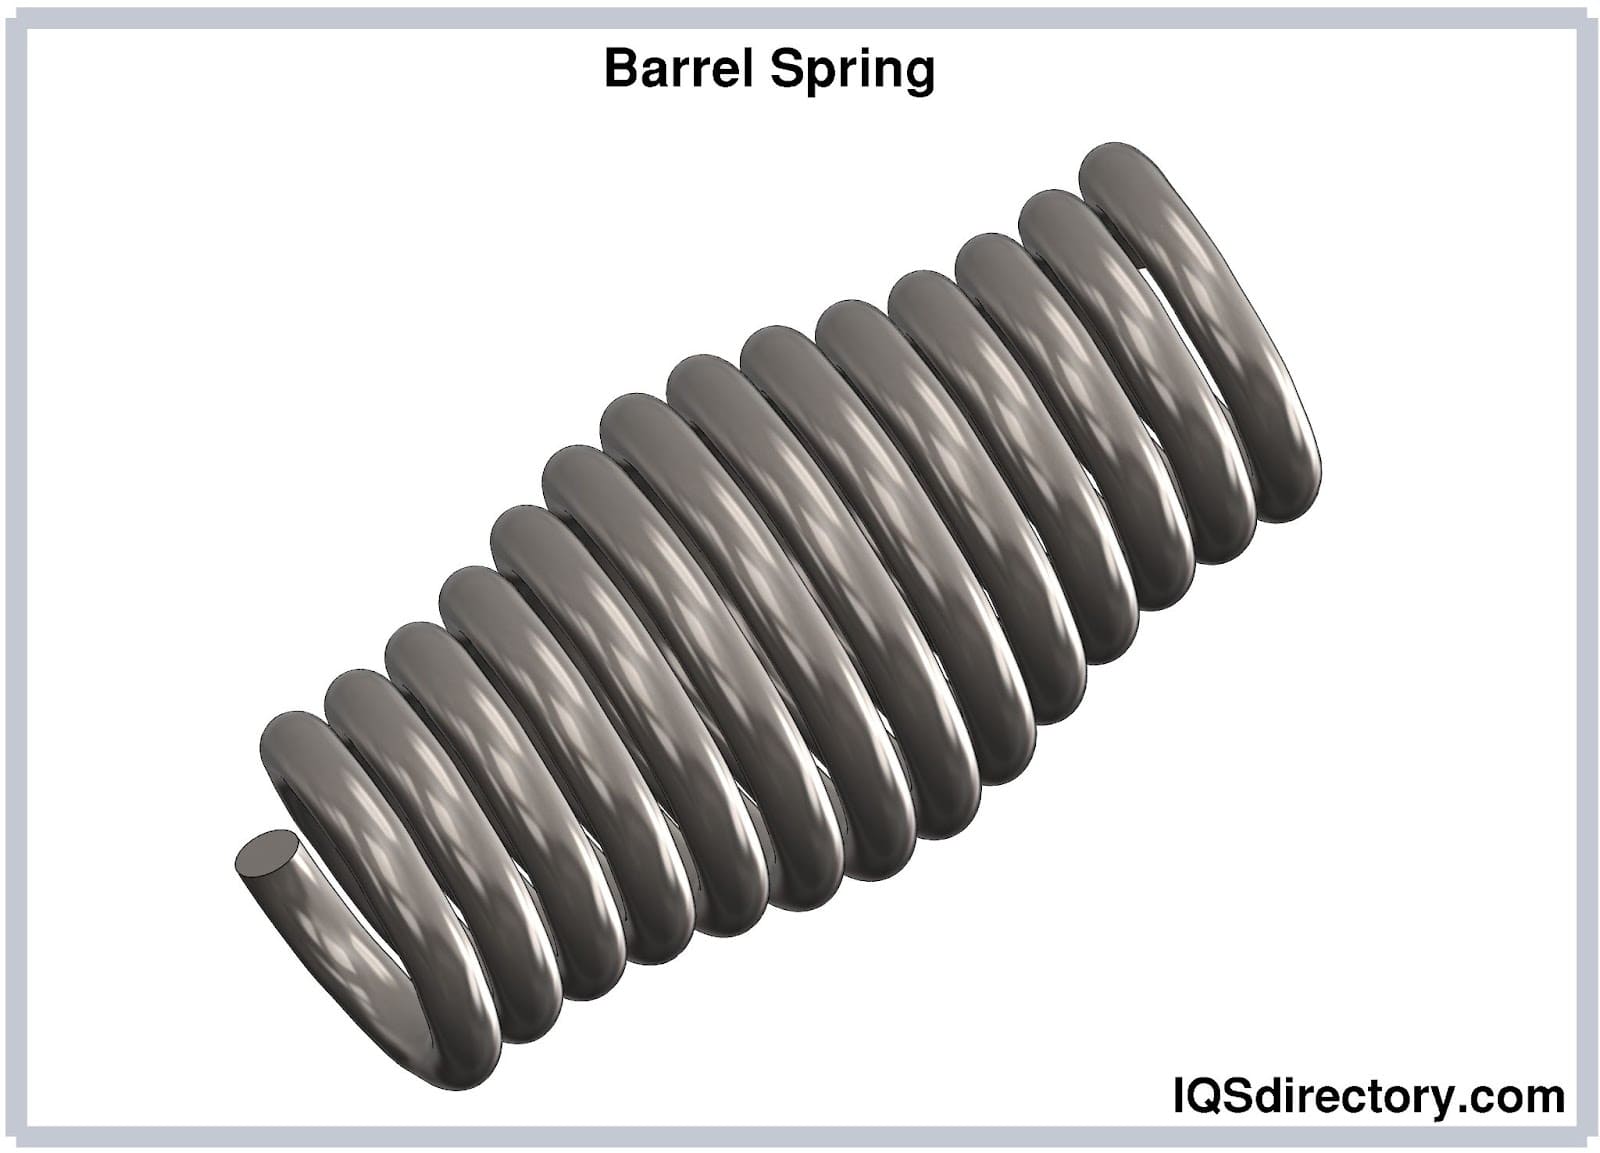 Barrel Spring